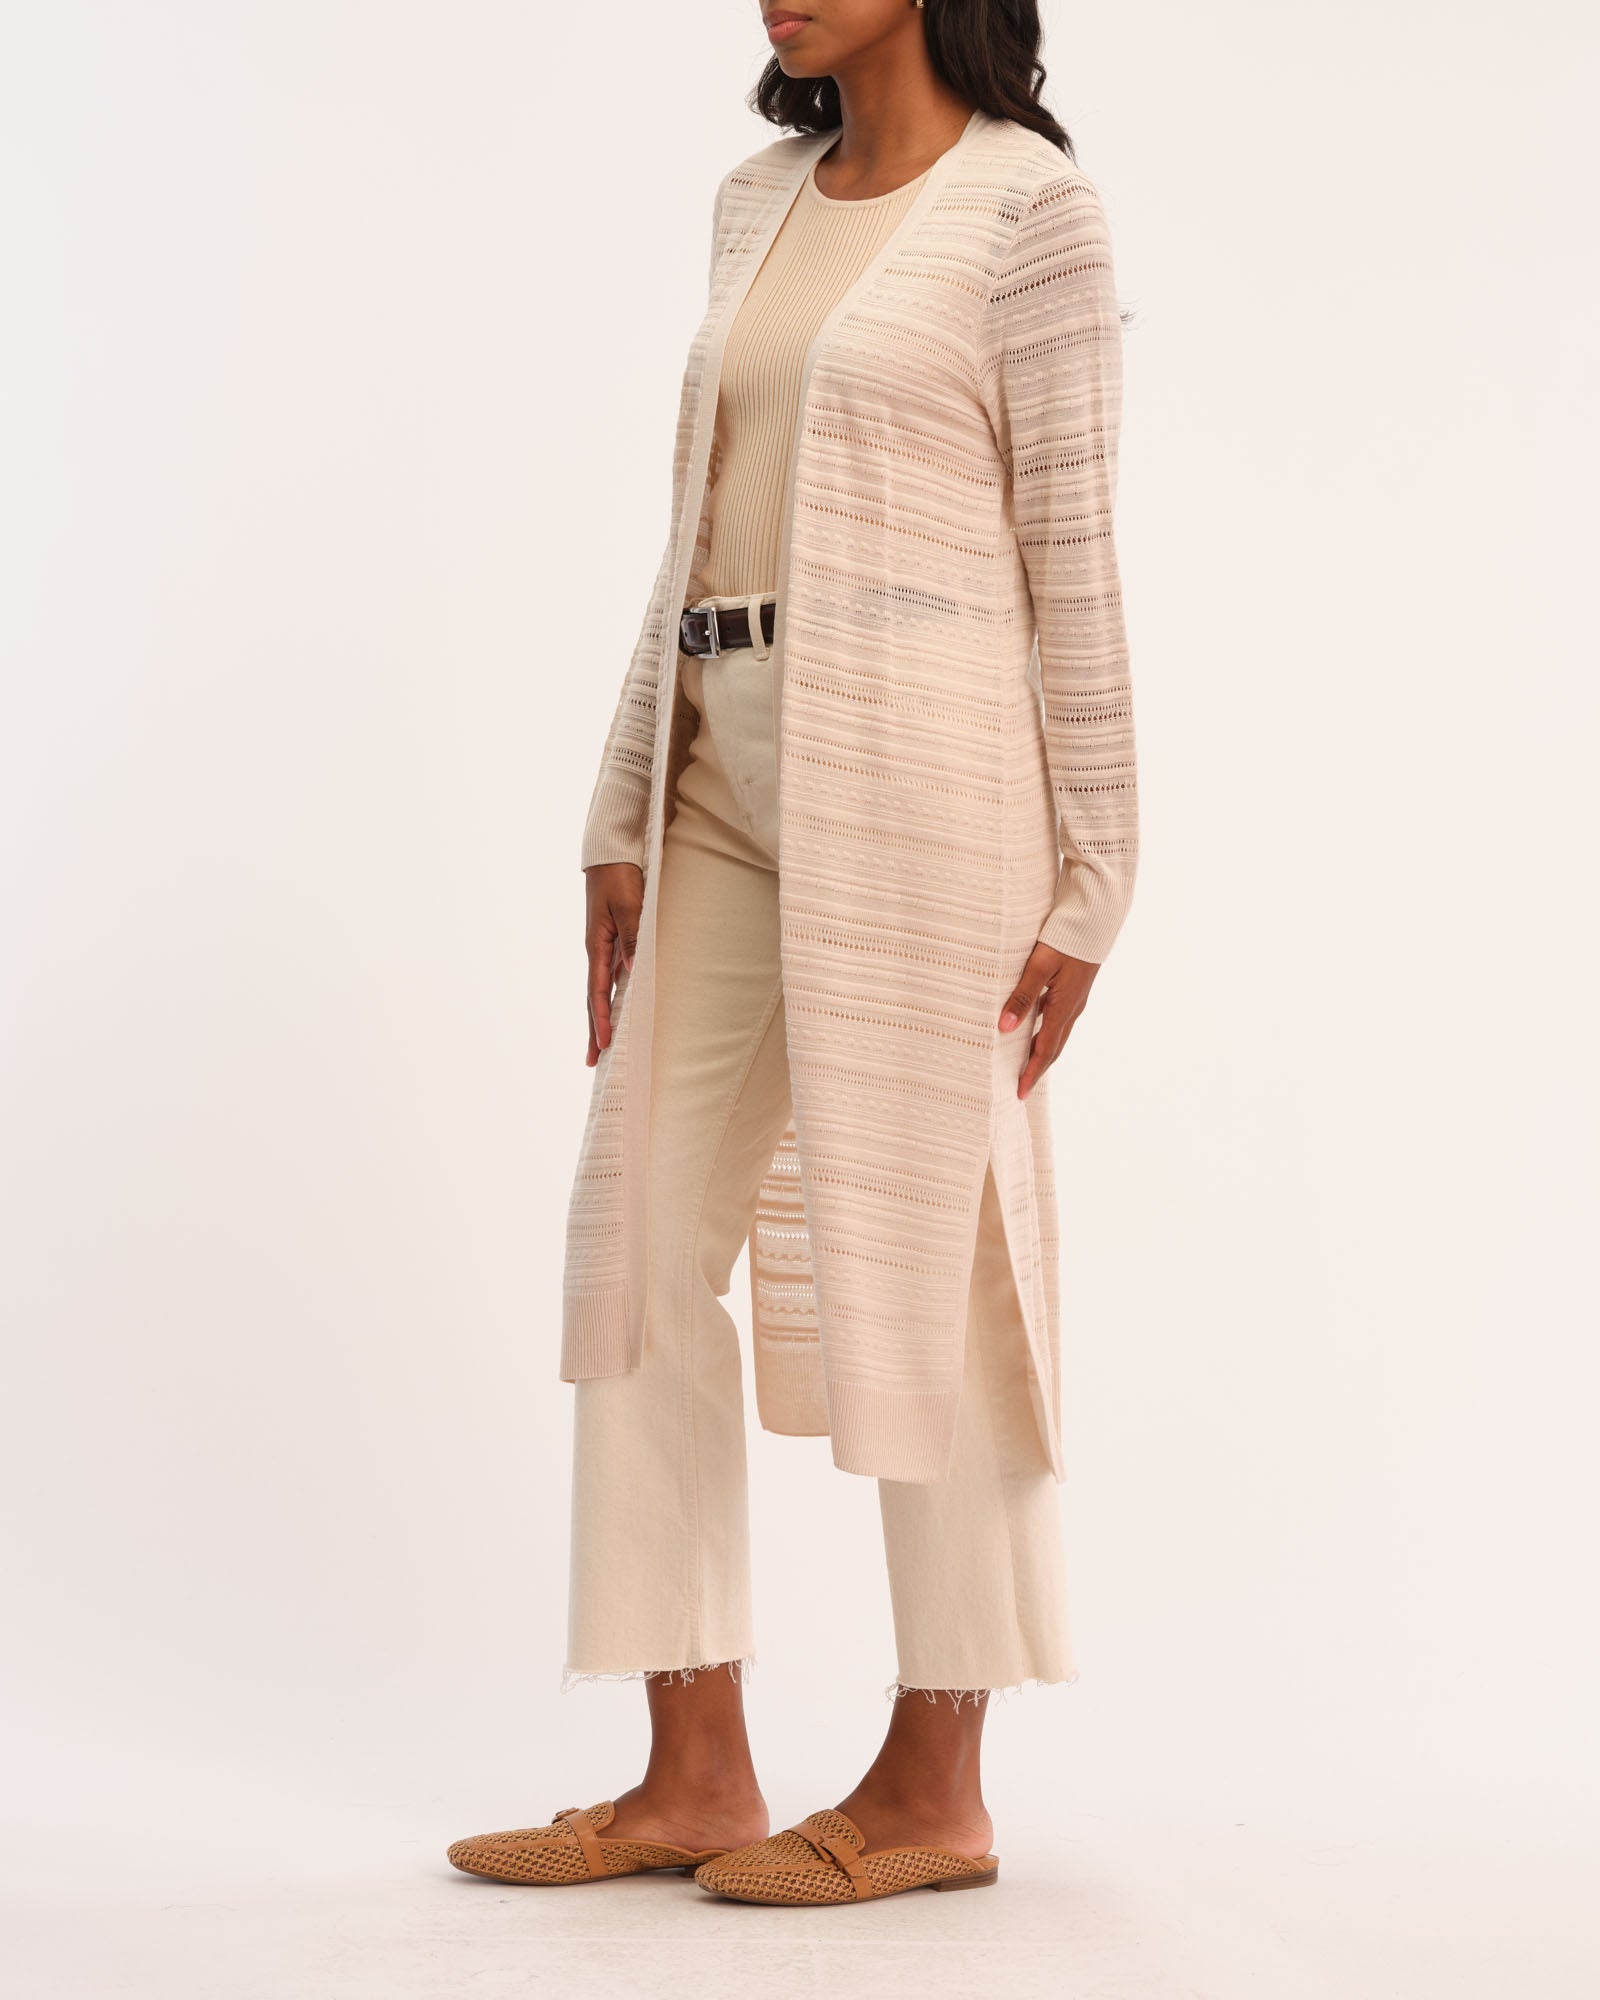 Elie Elie Tahari Women's Pointelle Texture Stitch Long Cardigan | JANE + MERCER